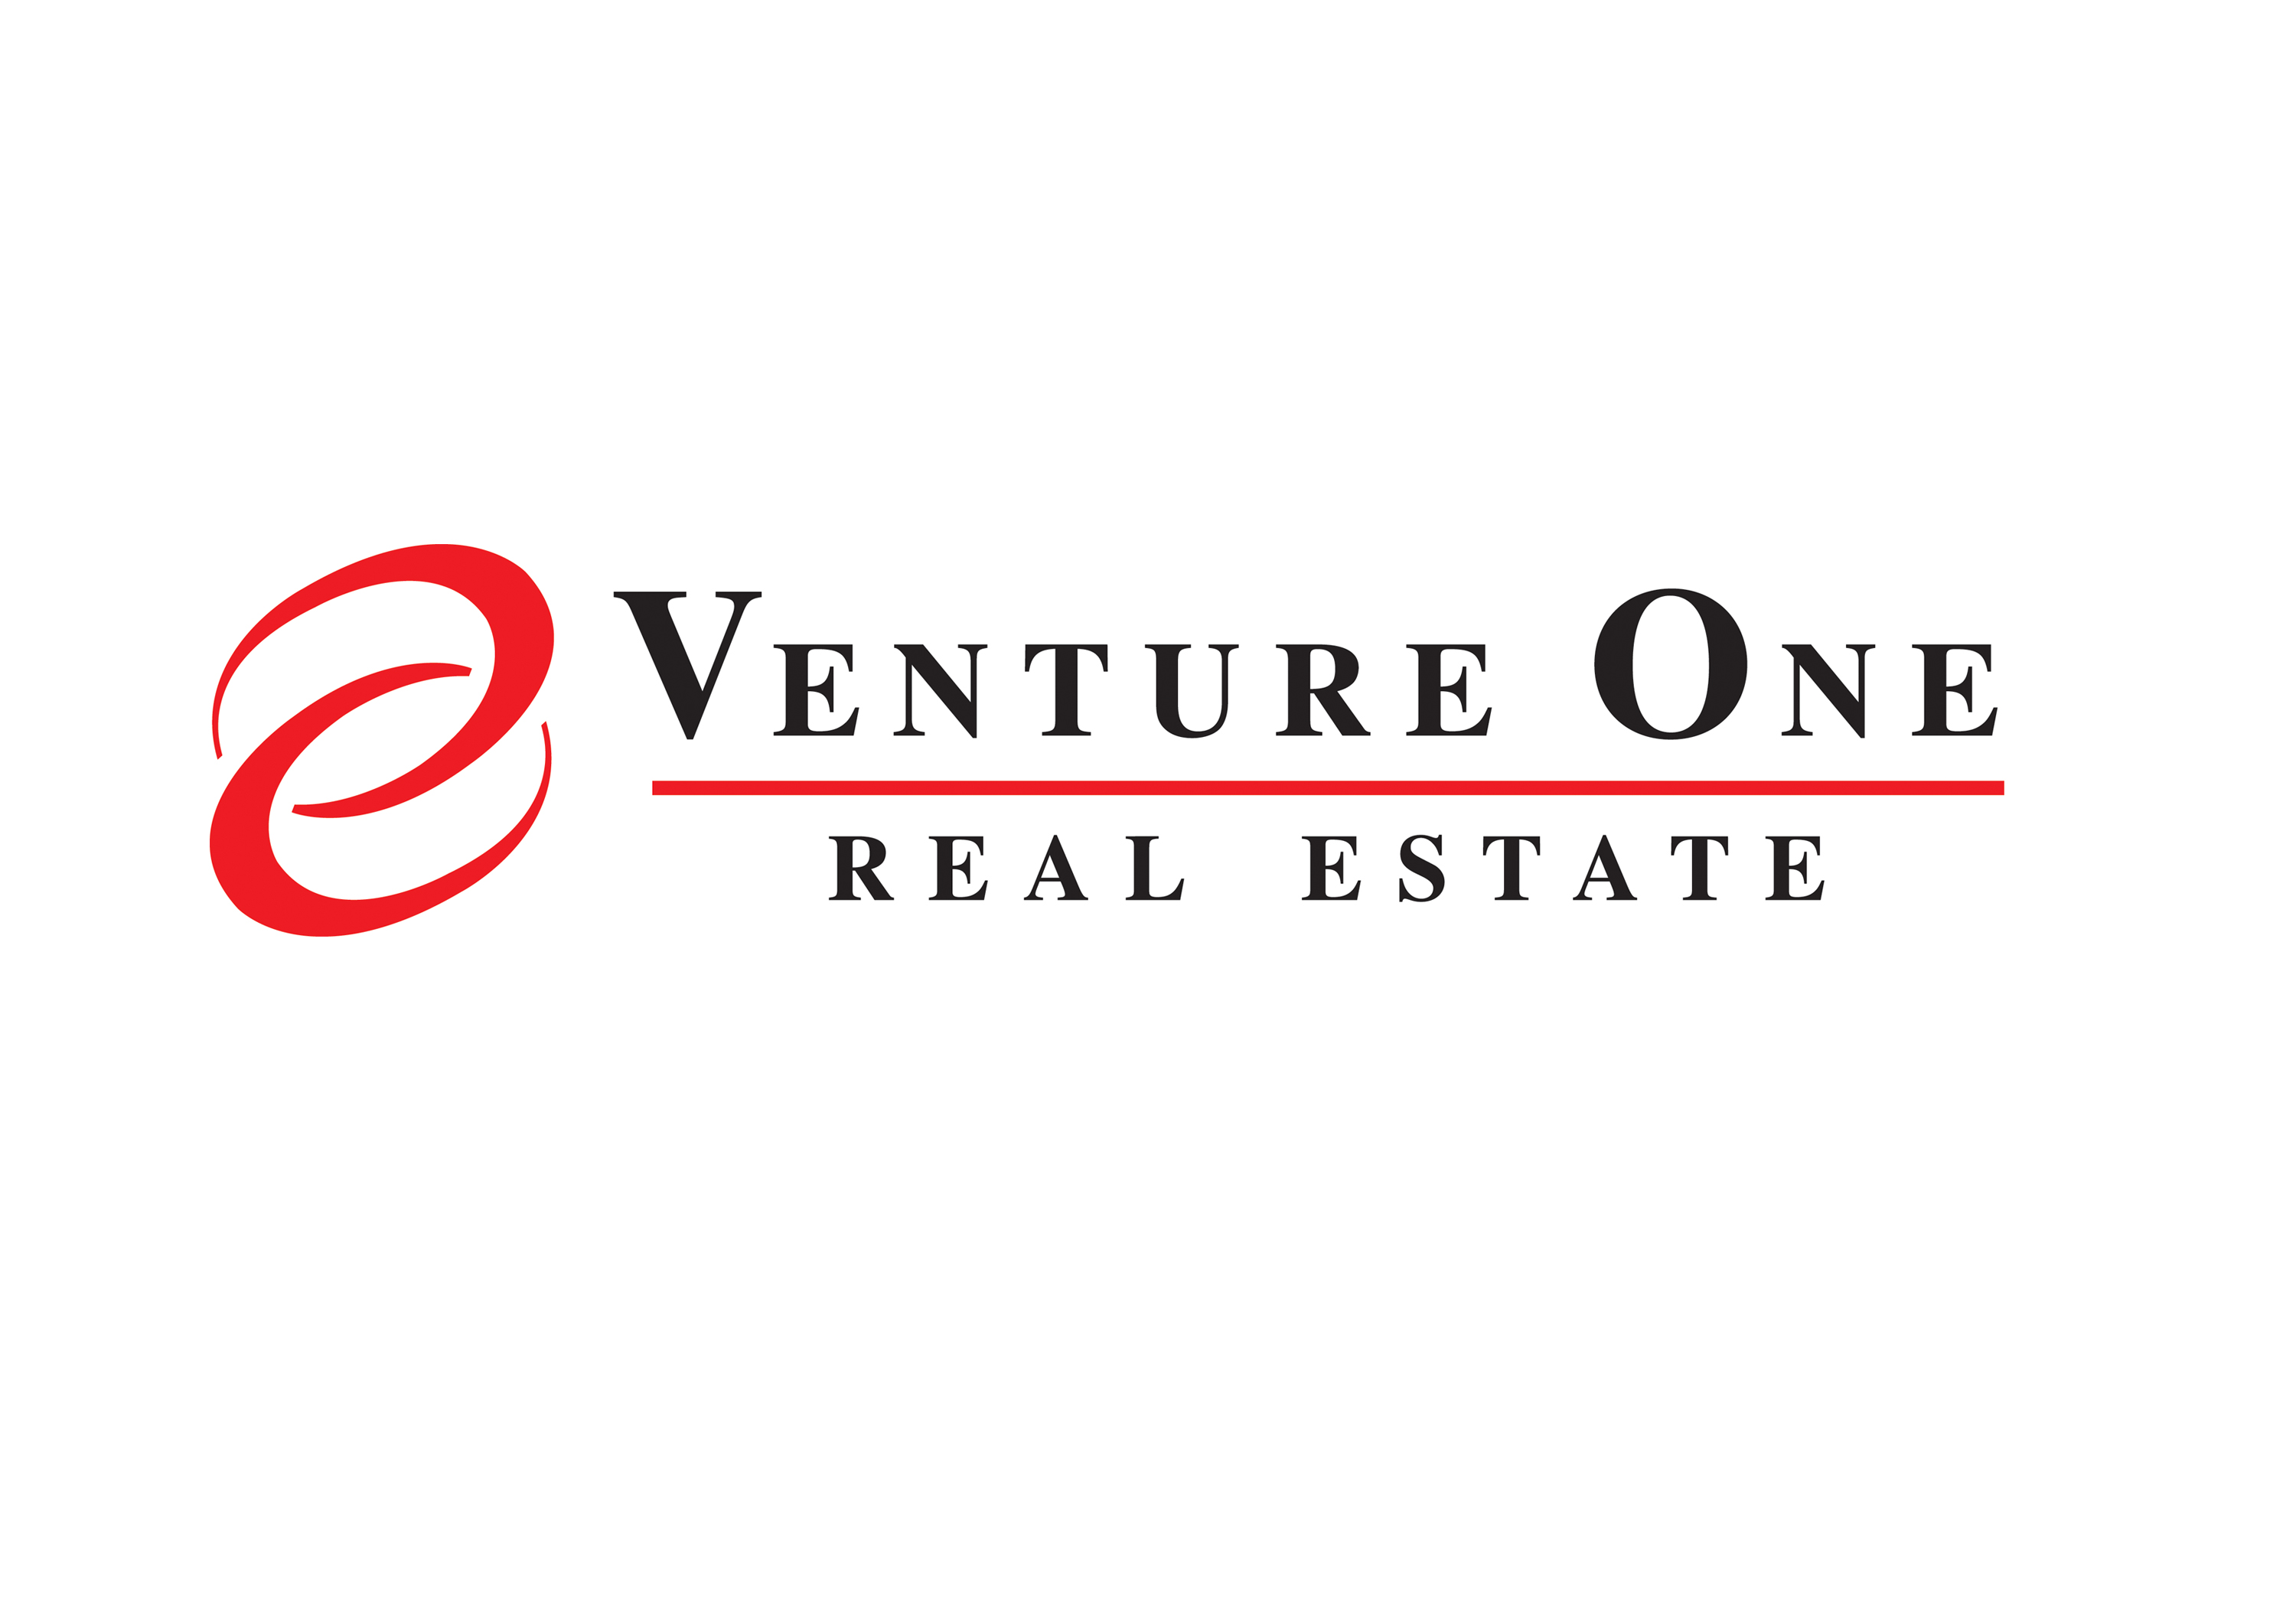 Venture One Real Estate